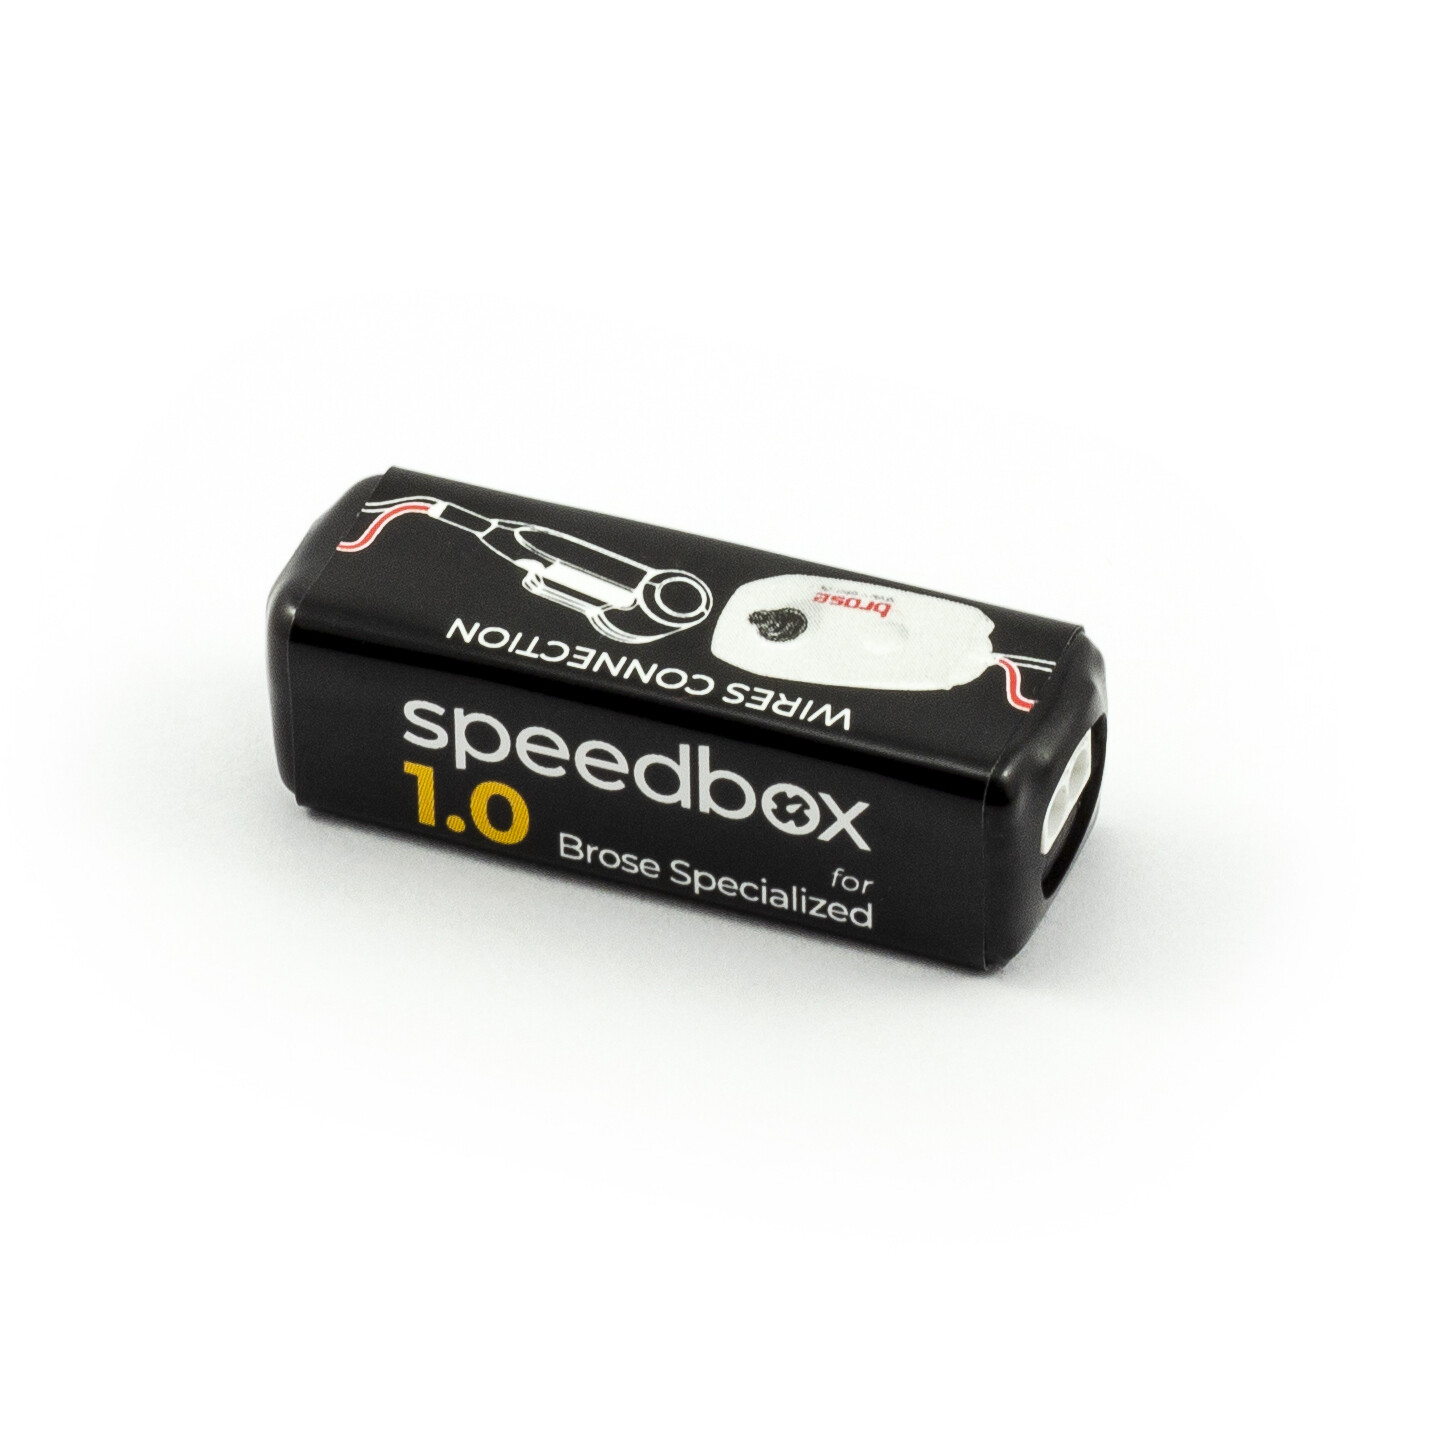 speedbox 1.0 for brose specialized